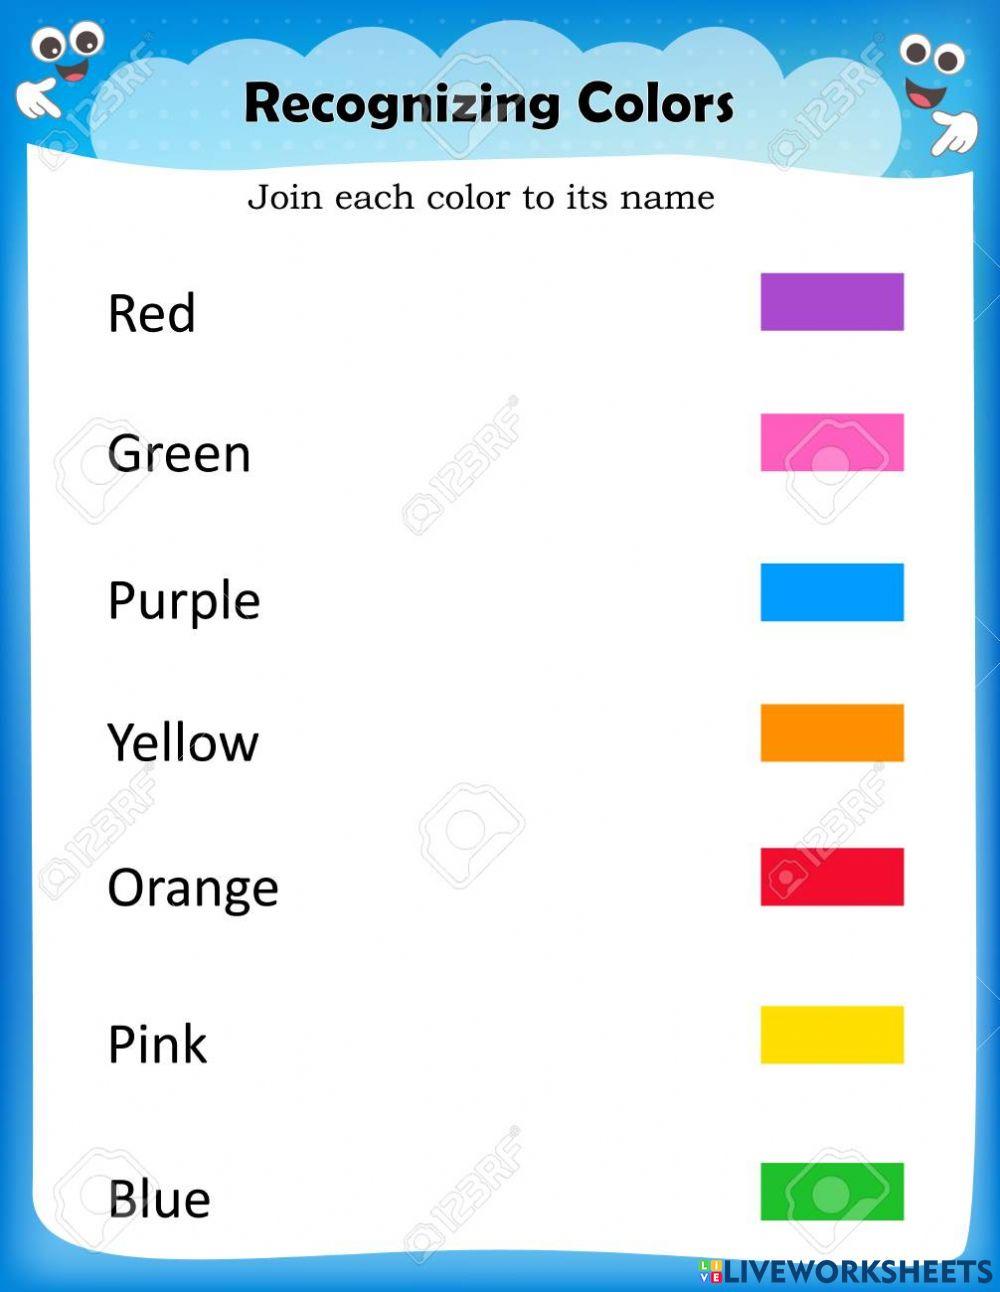 Recognizing colours